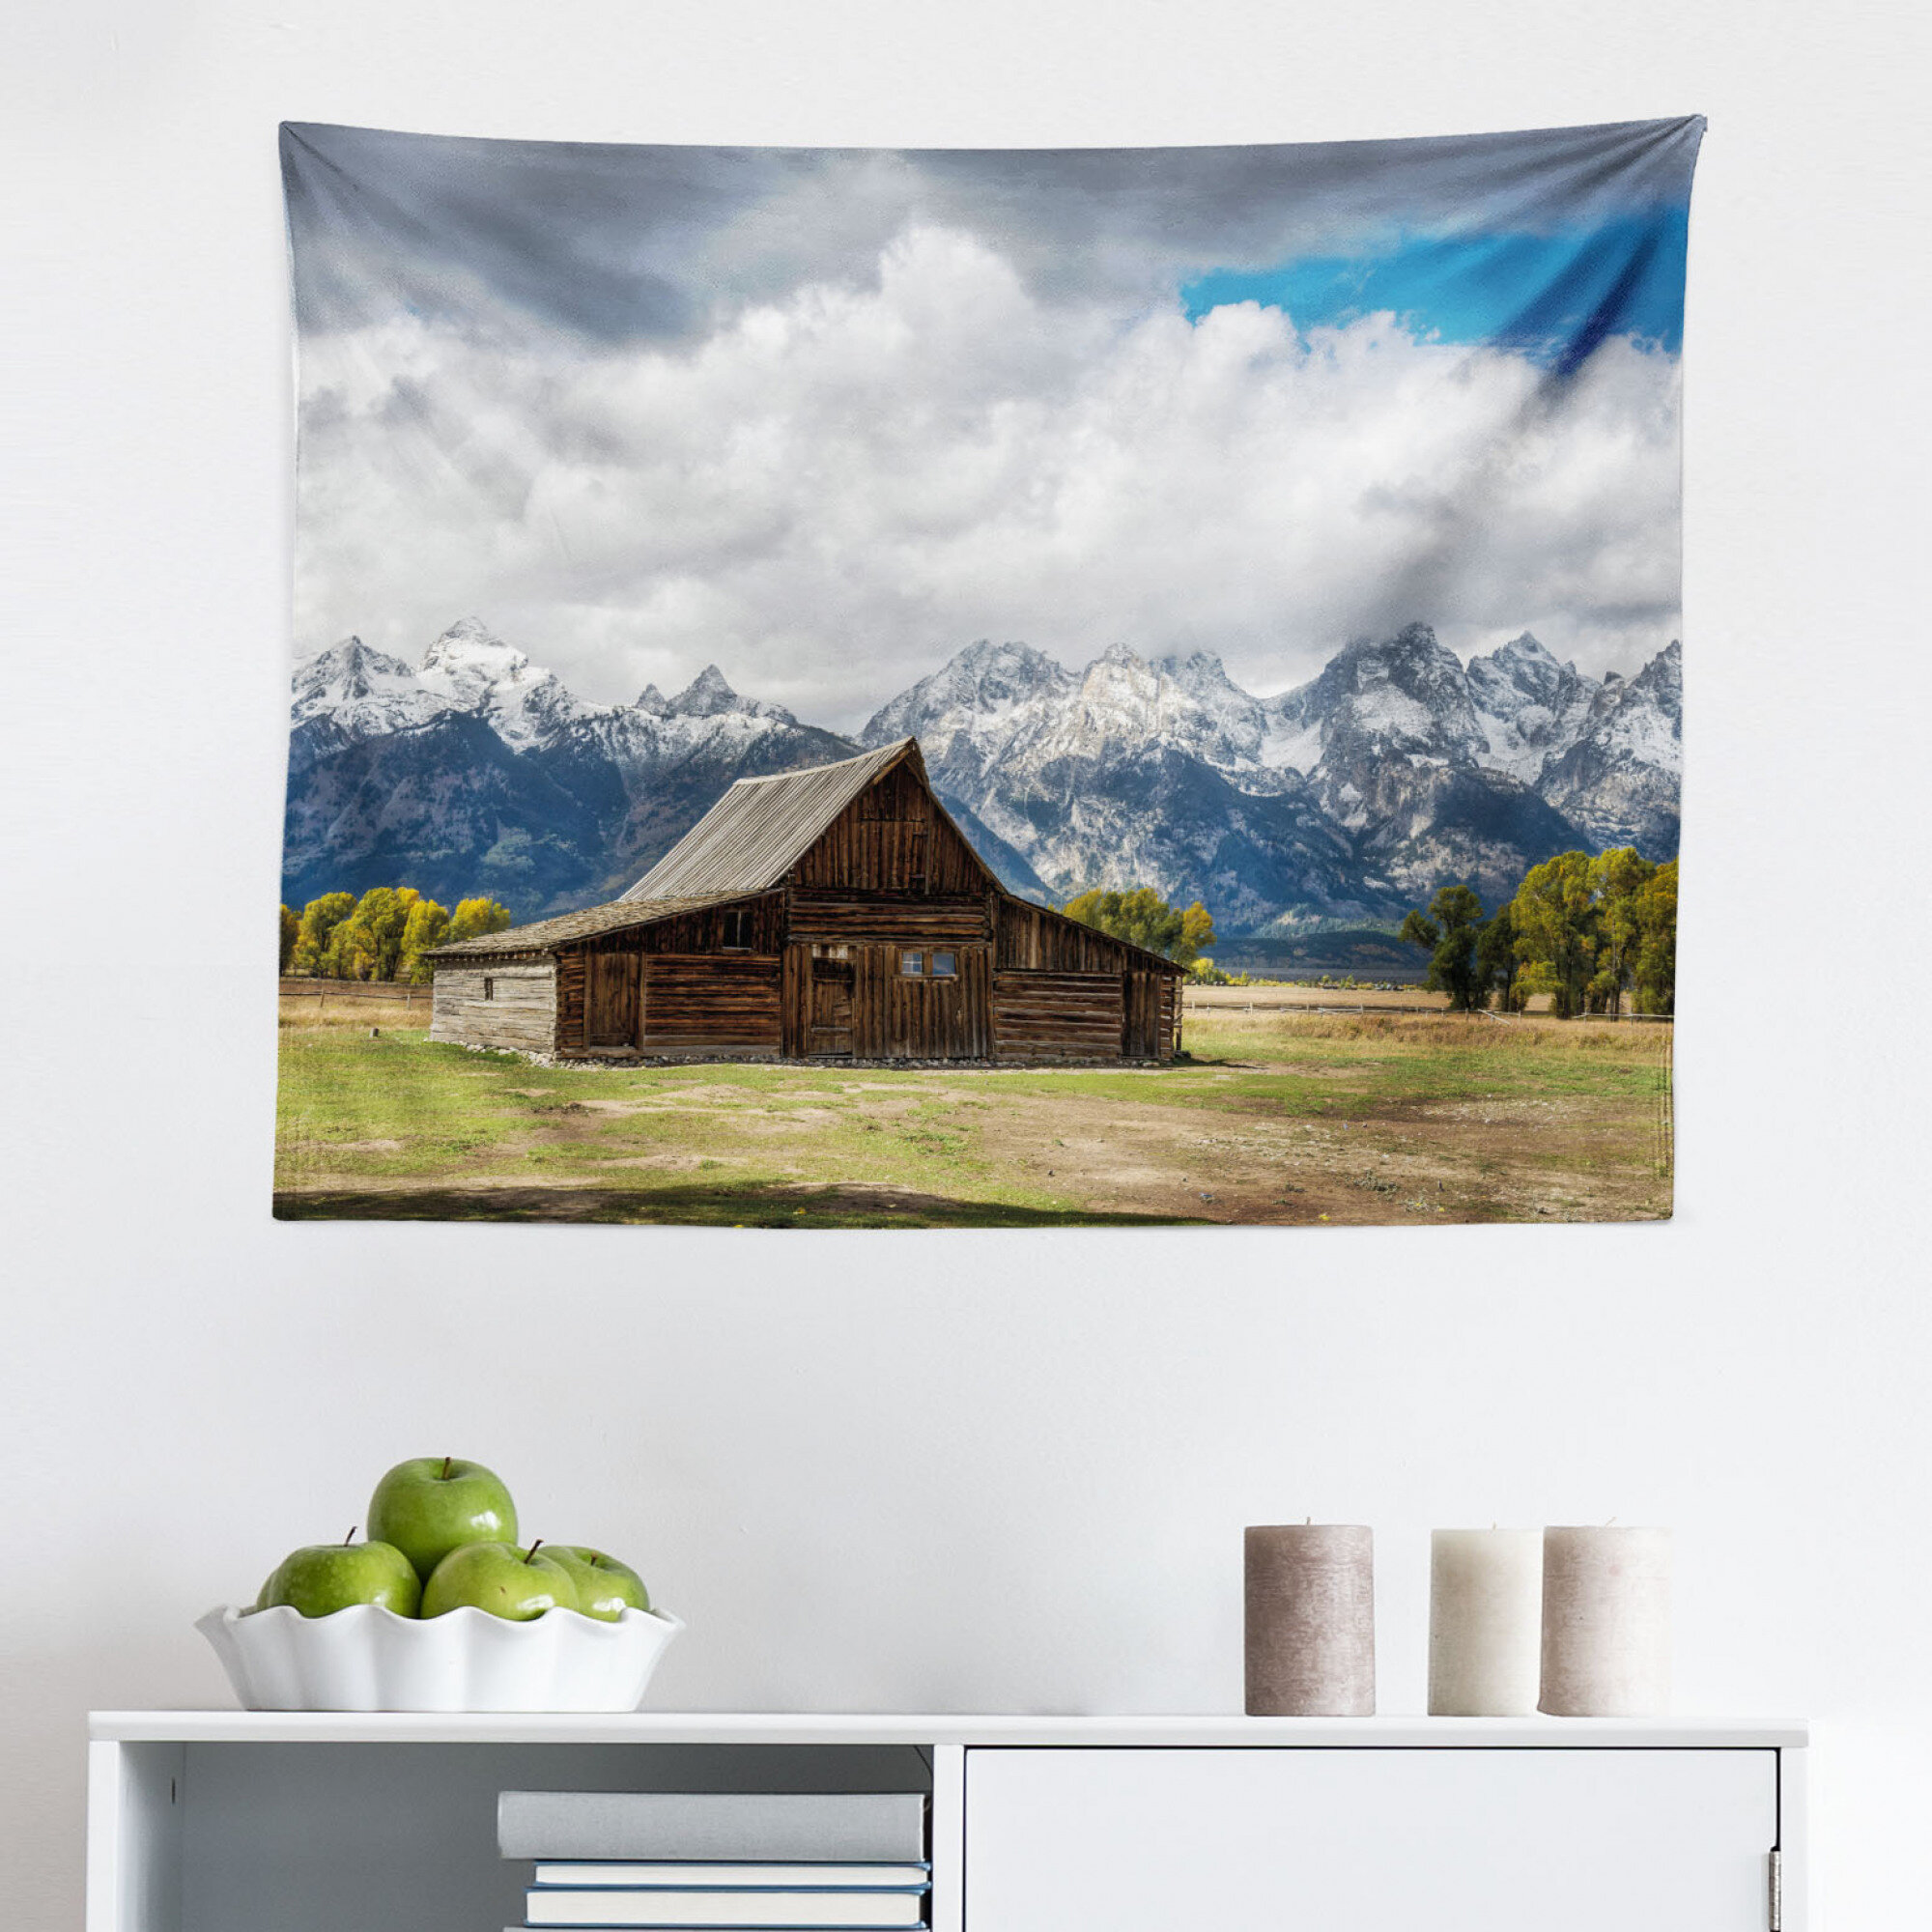 Buffalo Bills Tapestry Wall Hanging Cover Dorm Decor Living Room Bedroom Poster 